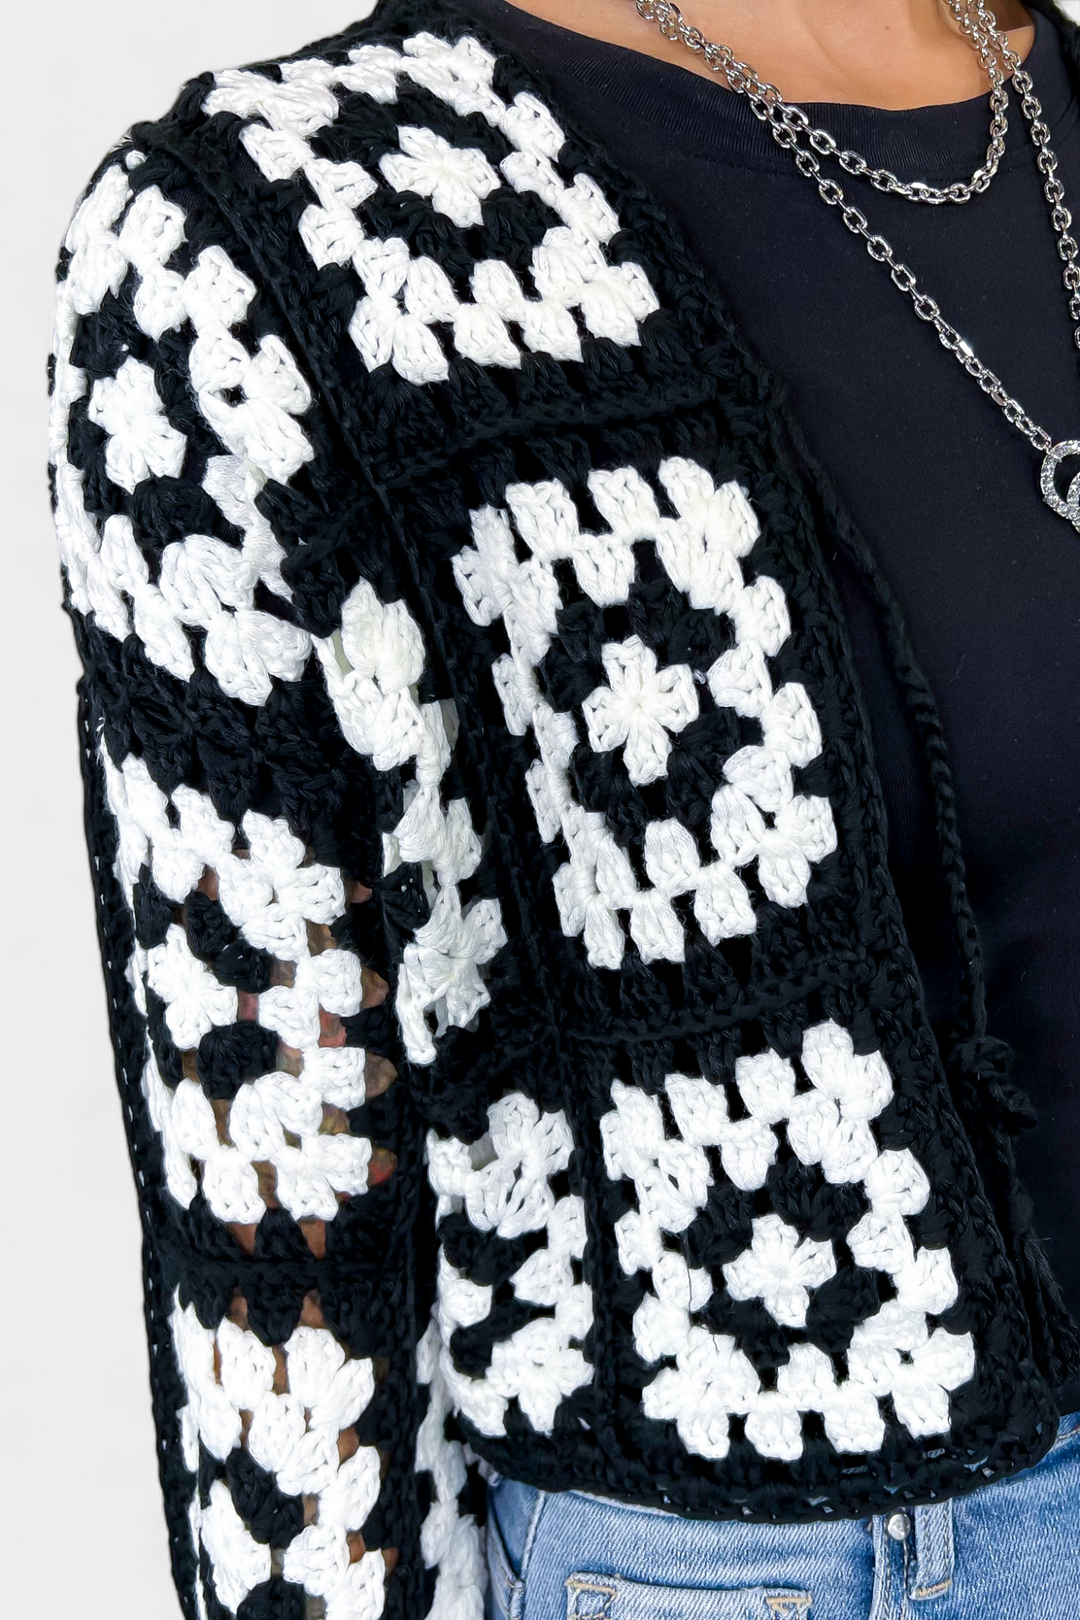 Black Crochet Cardigan